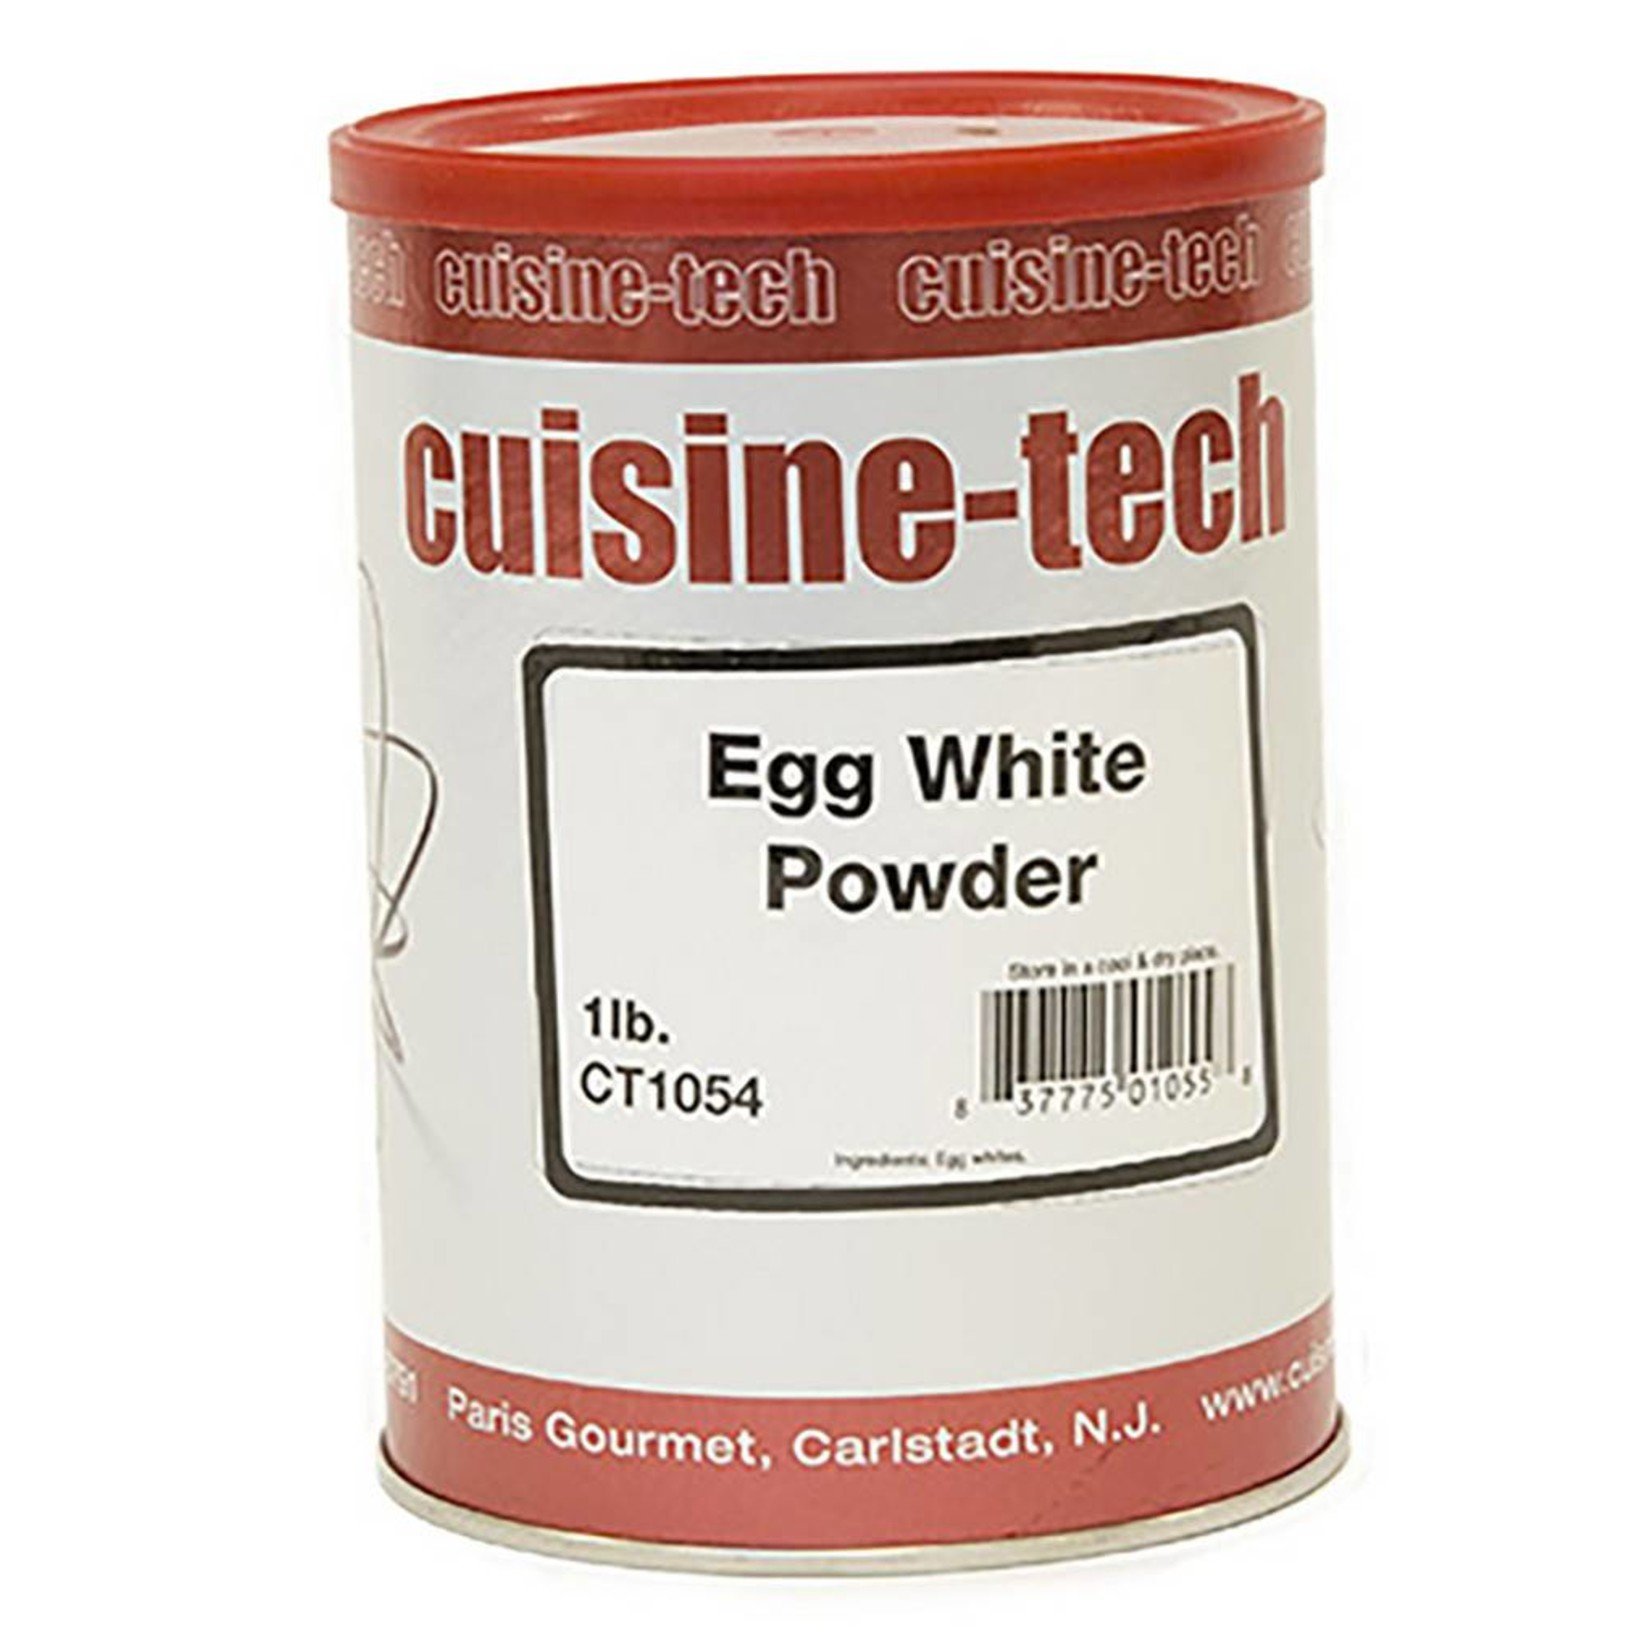 Cuisine Tech Cuisine Tech - Egg White Powder - 1 lb